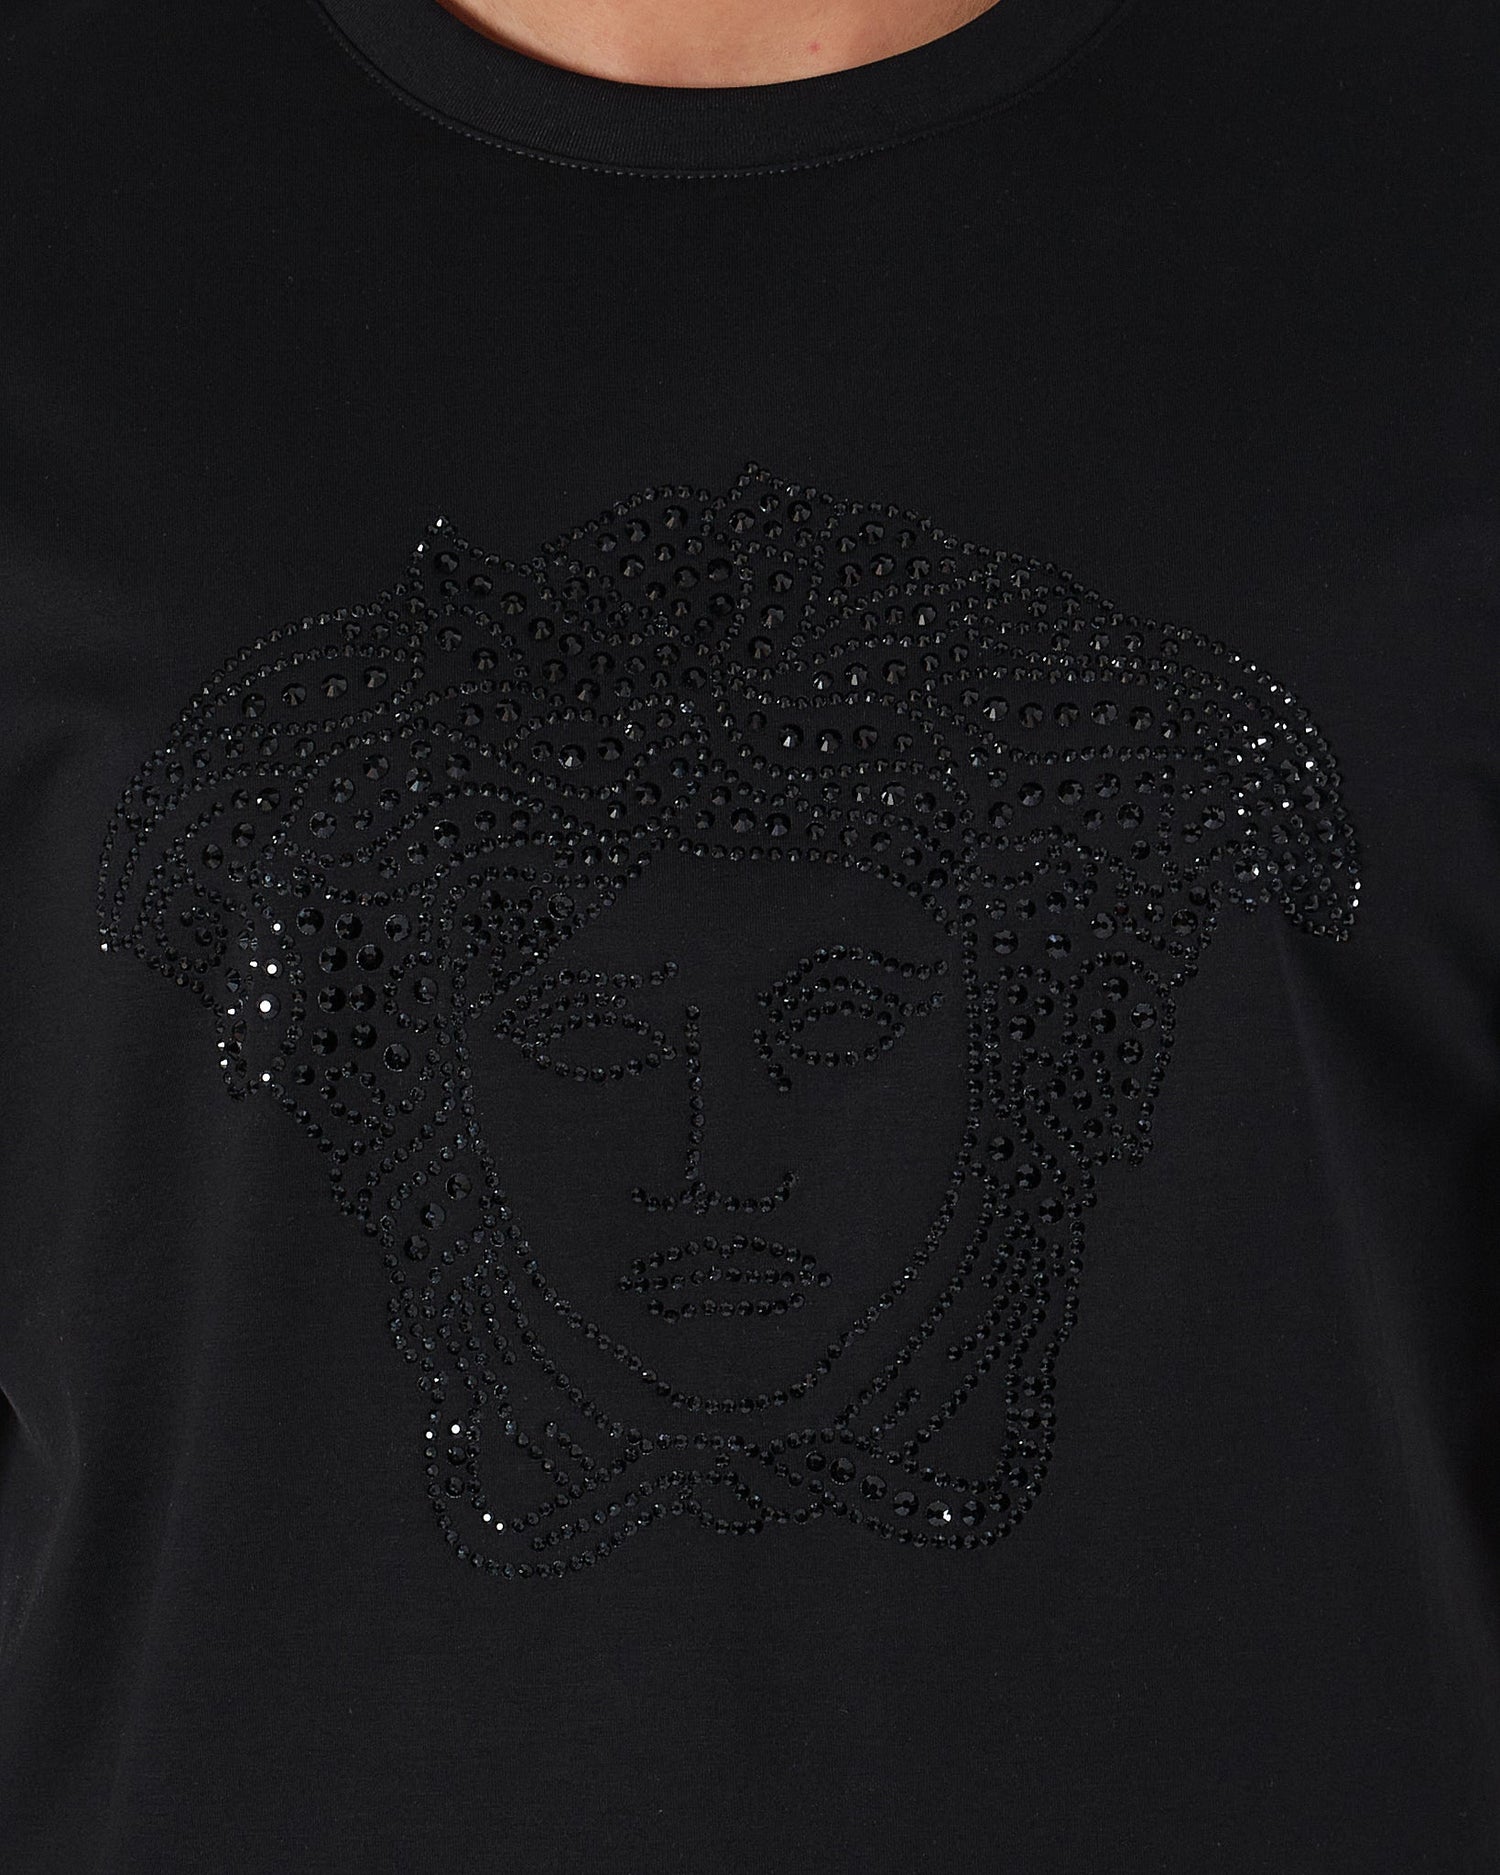 MOI OUTFIT-Rhinestone Medusa Printed Men T-Shirt 54.90